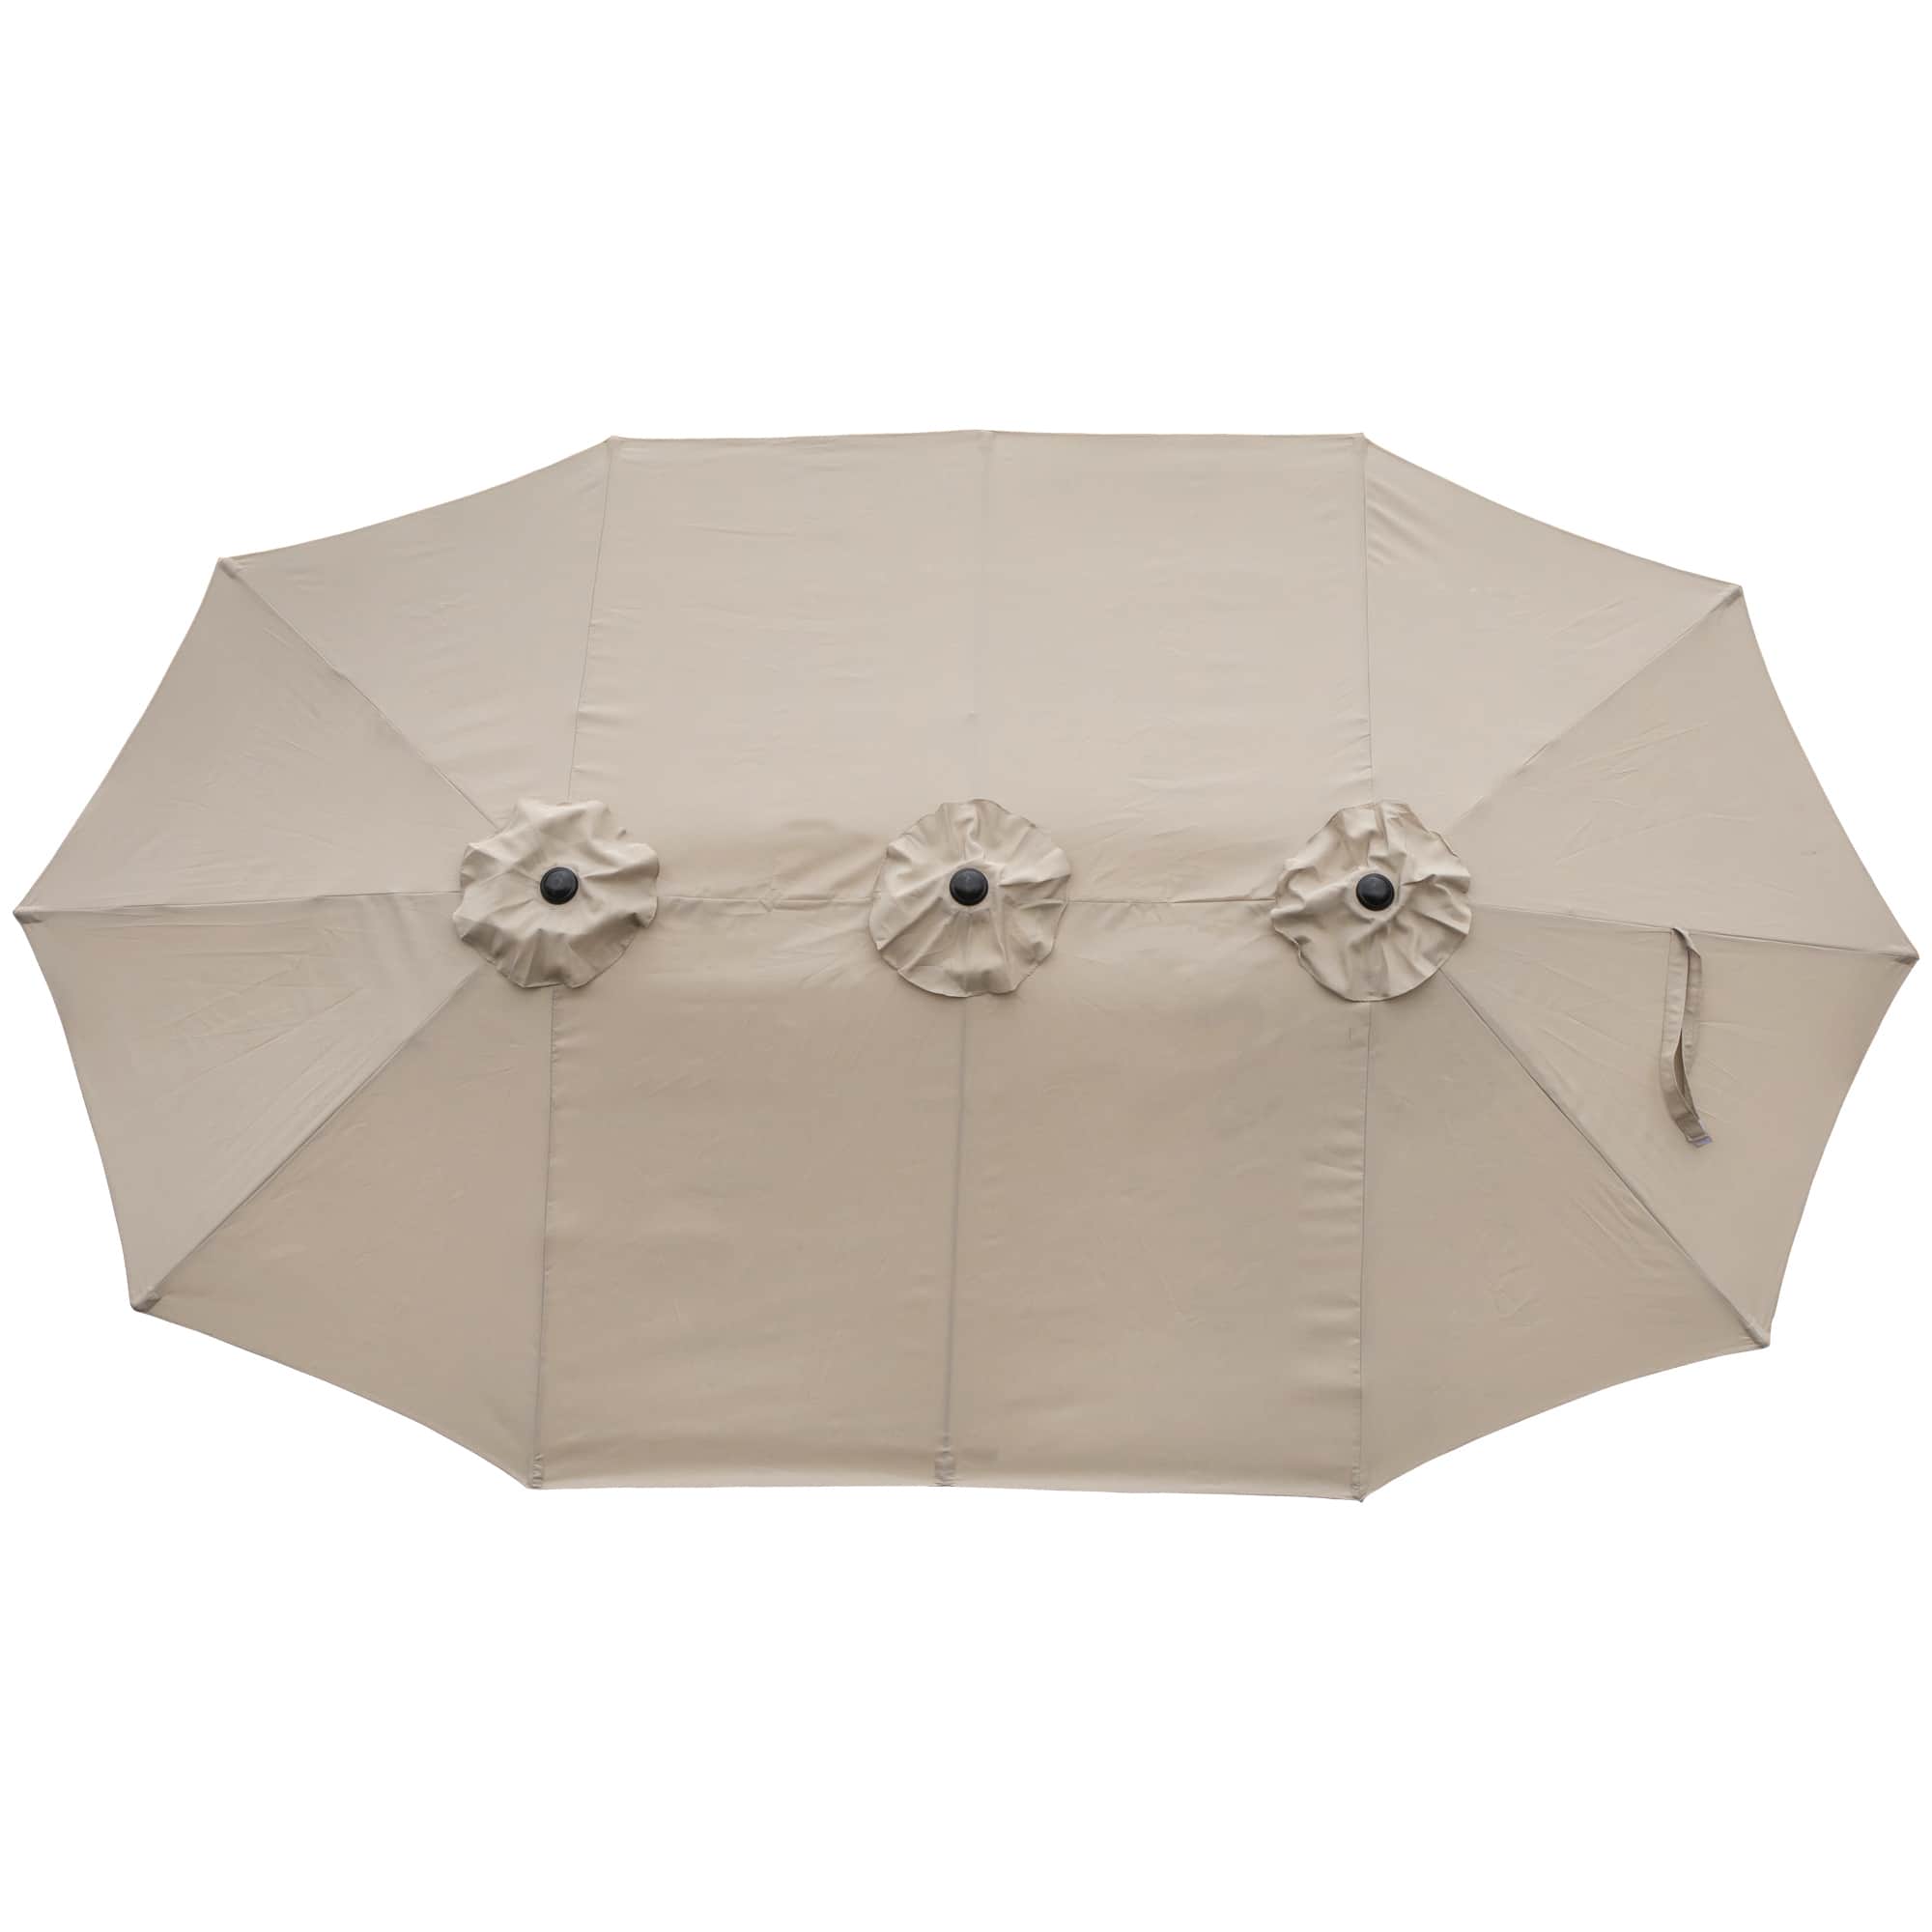 15ft. Outdoor Patio Market Umbrella with Hand Crank